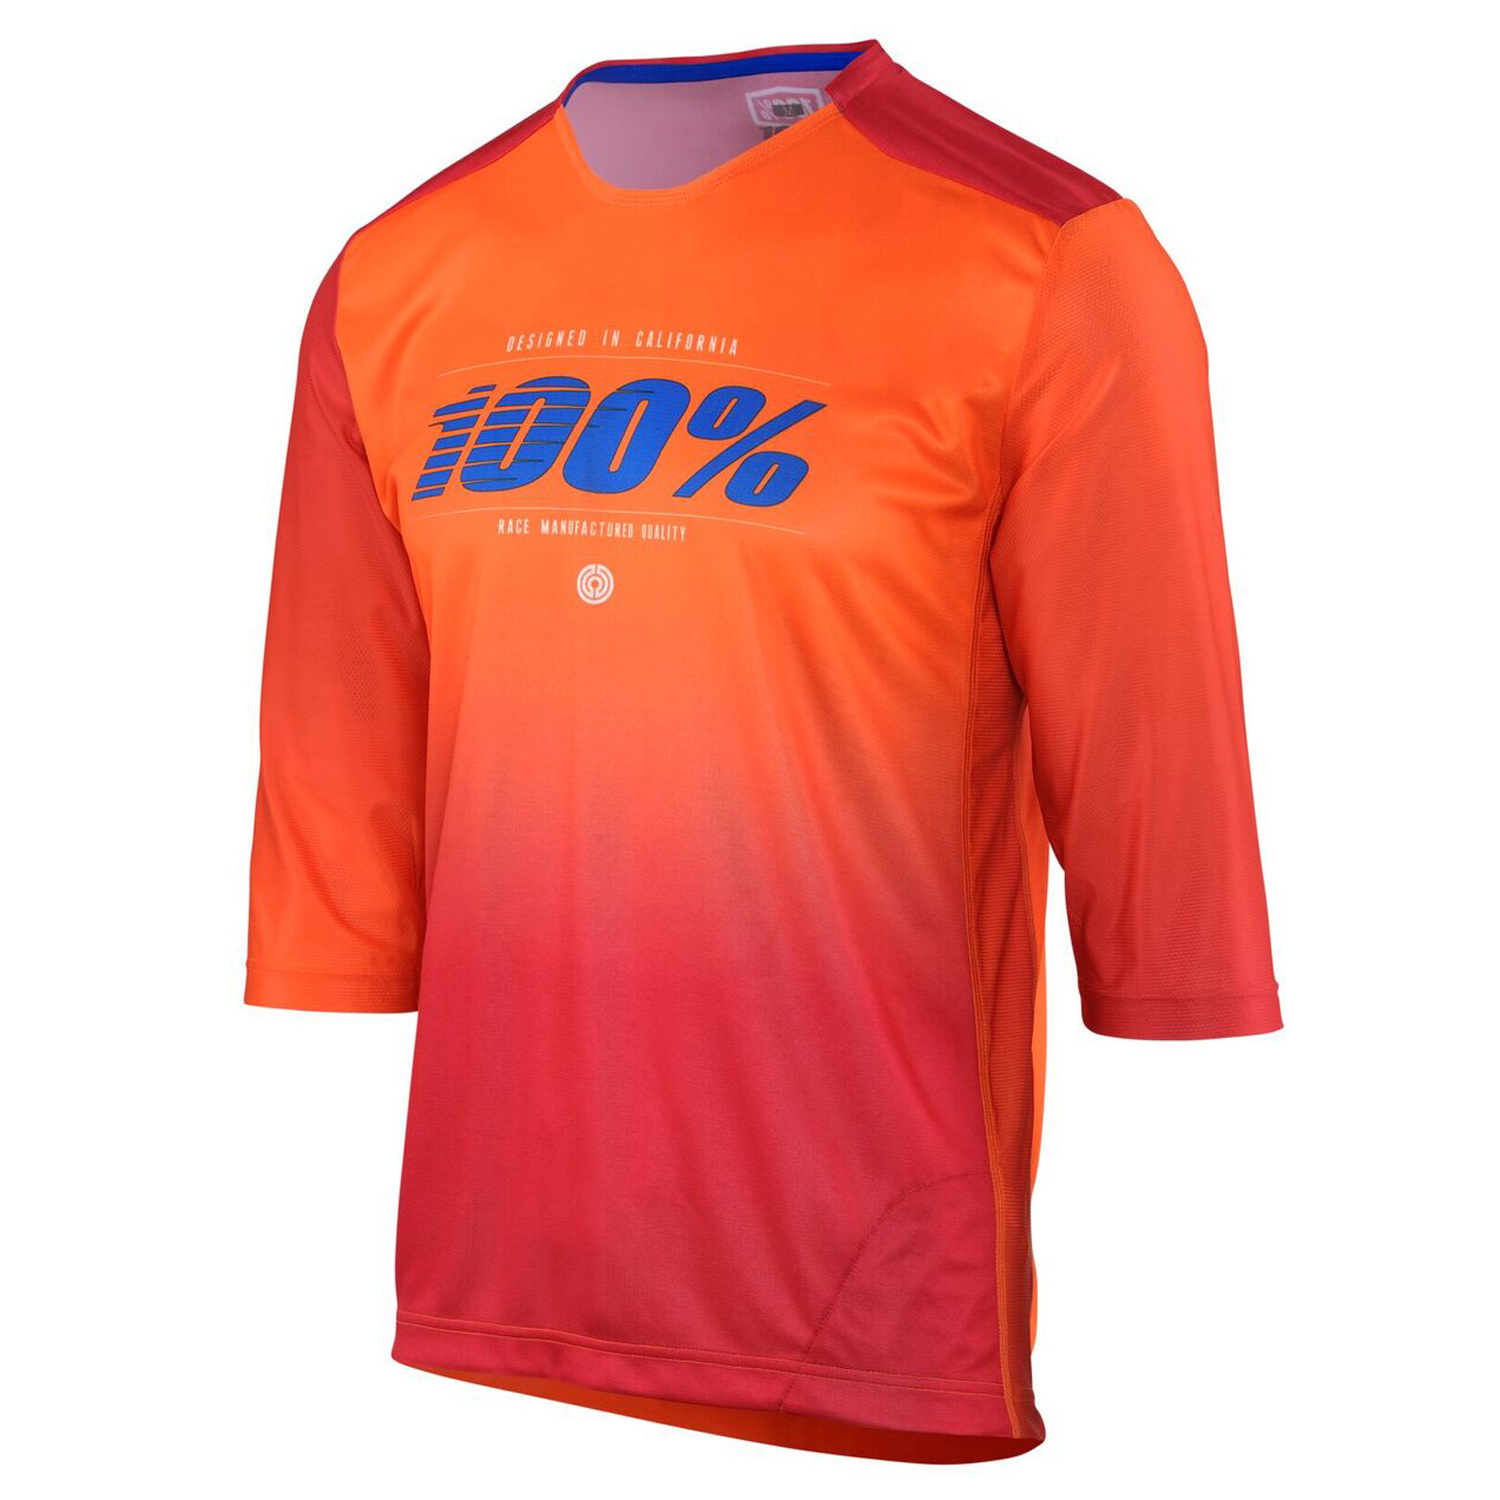 100% 3/4 Sleeve All Mountain Jersey Airmatic Blaze Orange